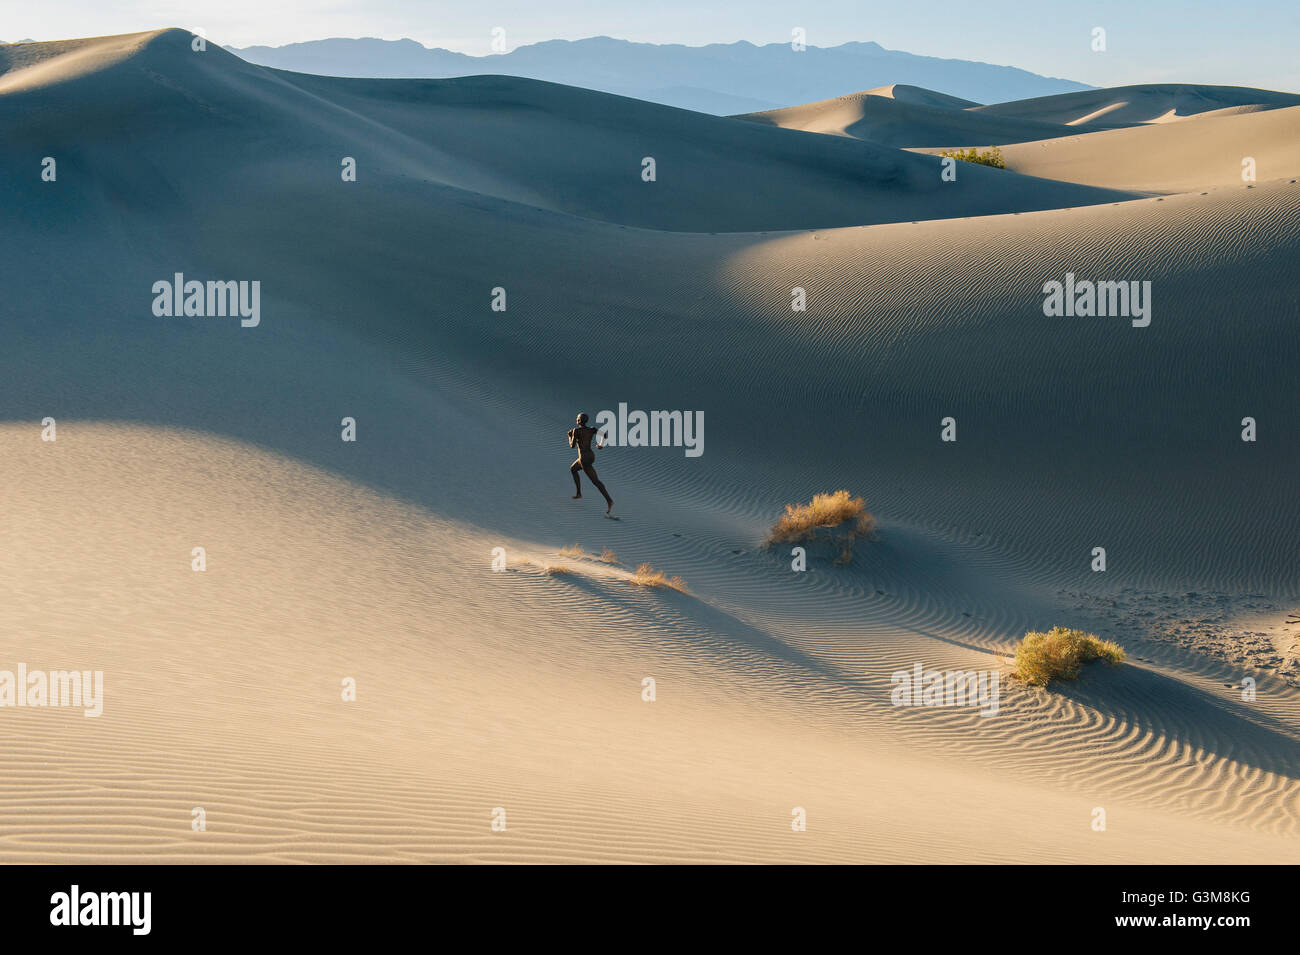 Nude woman in desert running up dune Stock Photo